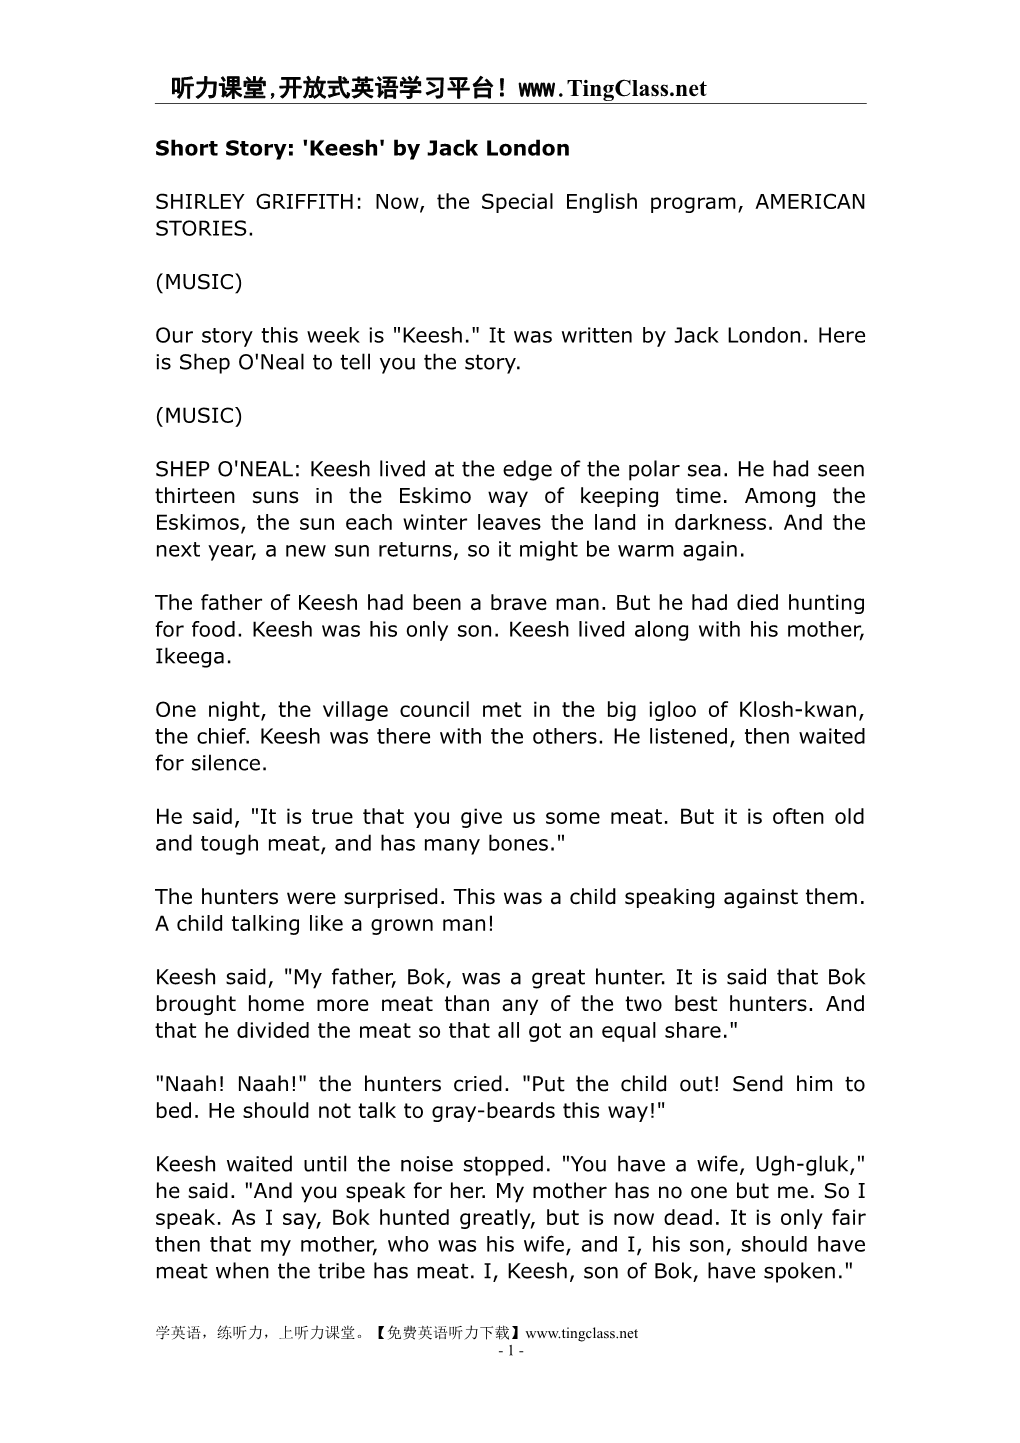 Short Story: 'Keesh' by Jack London